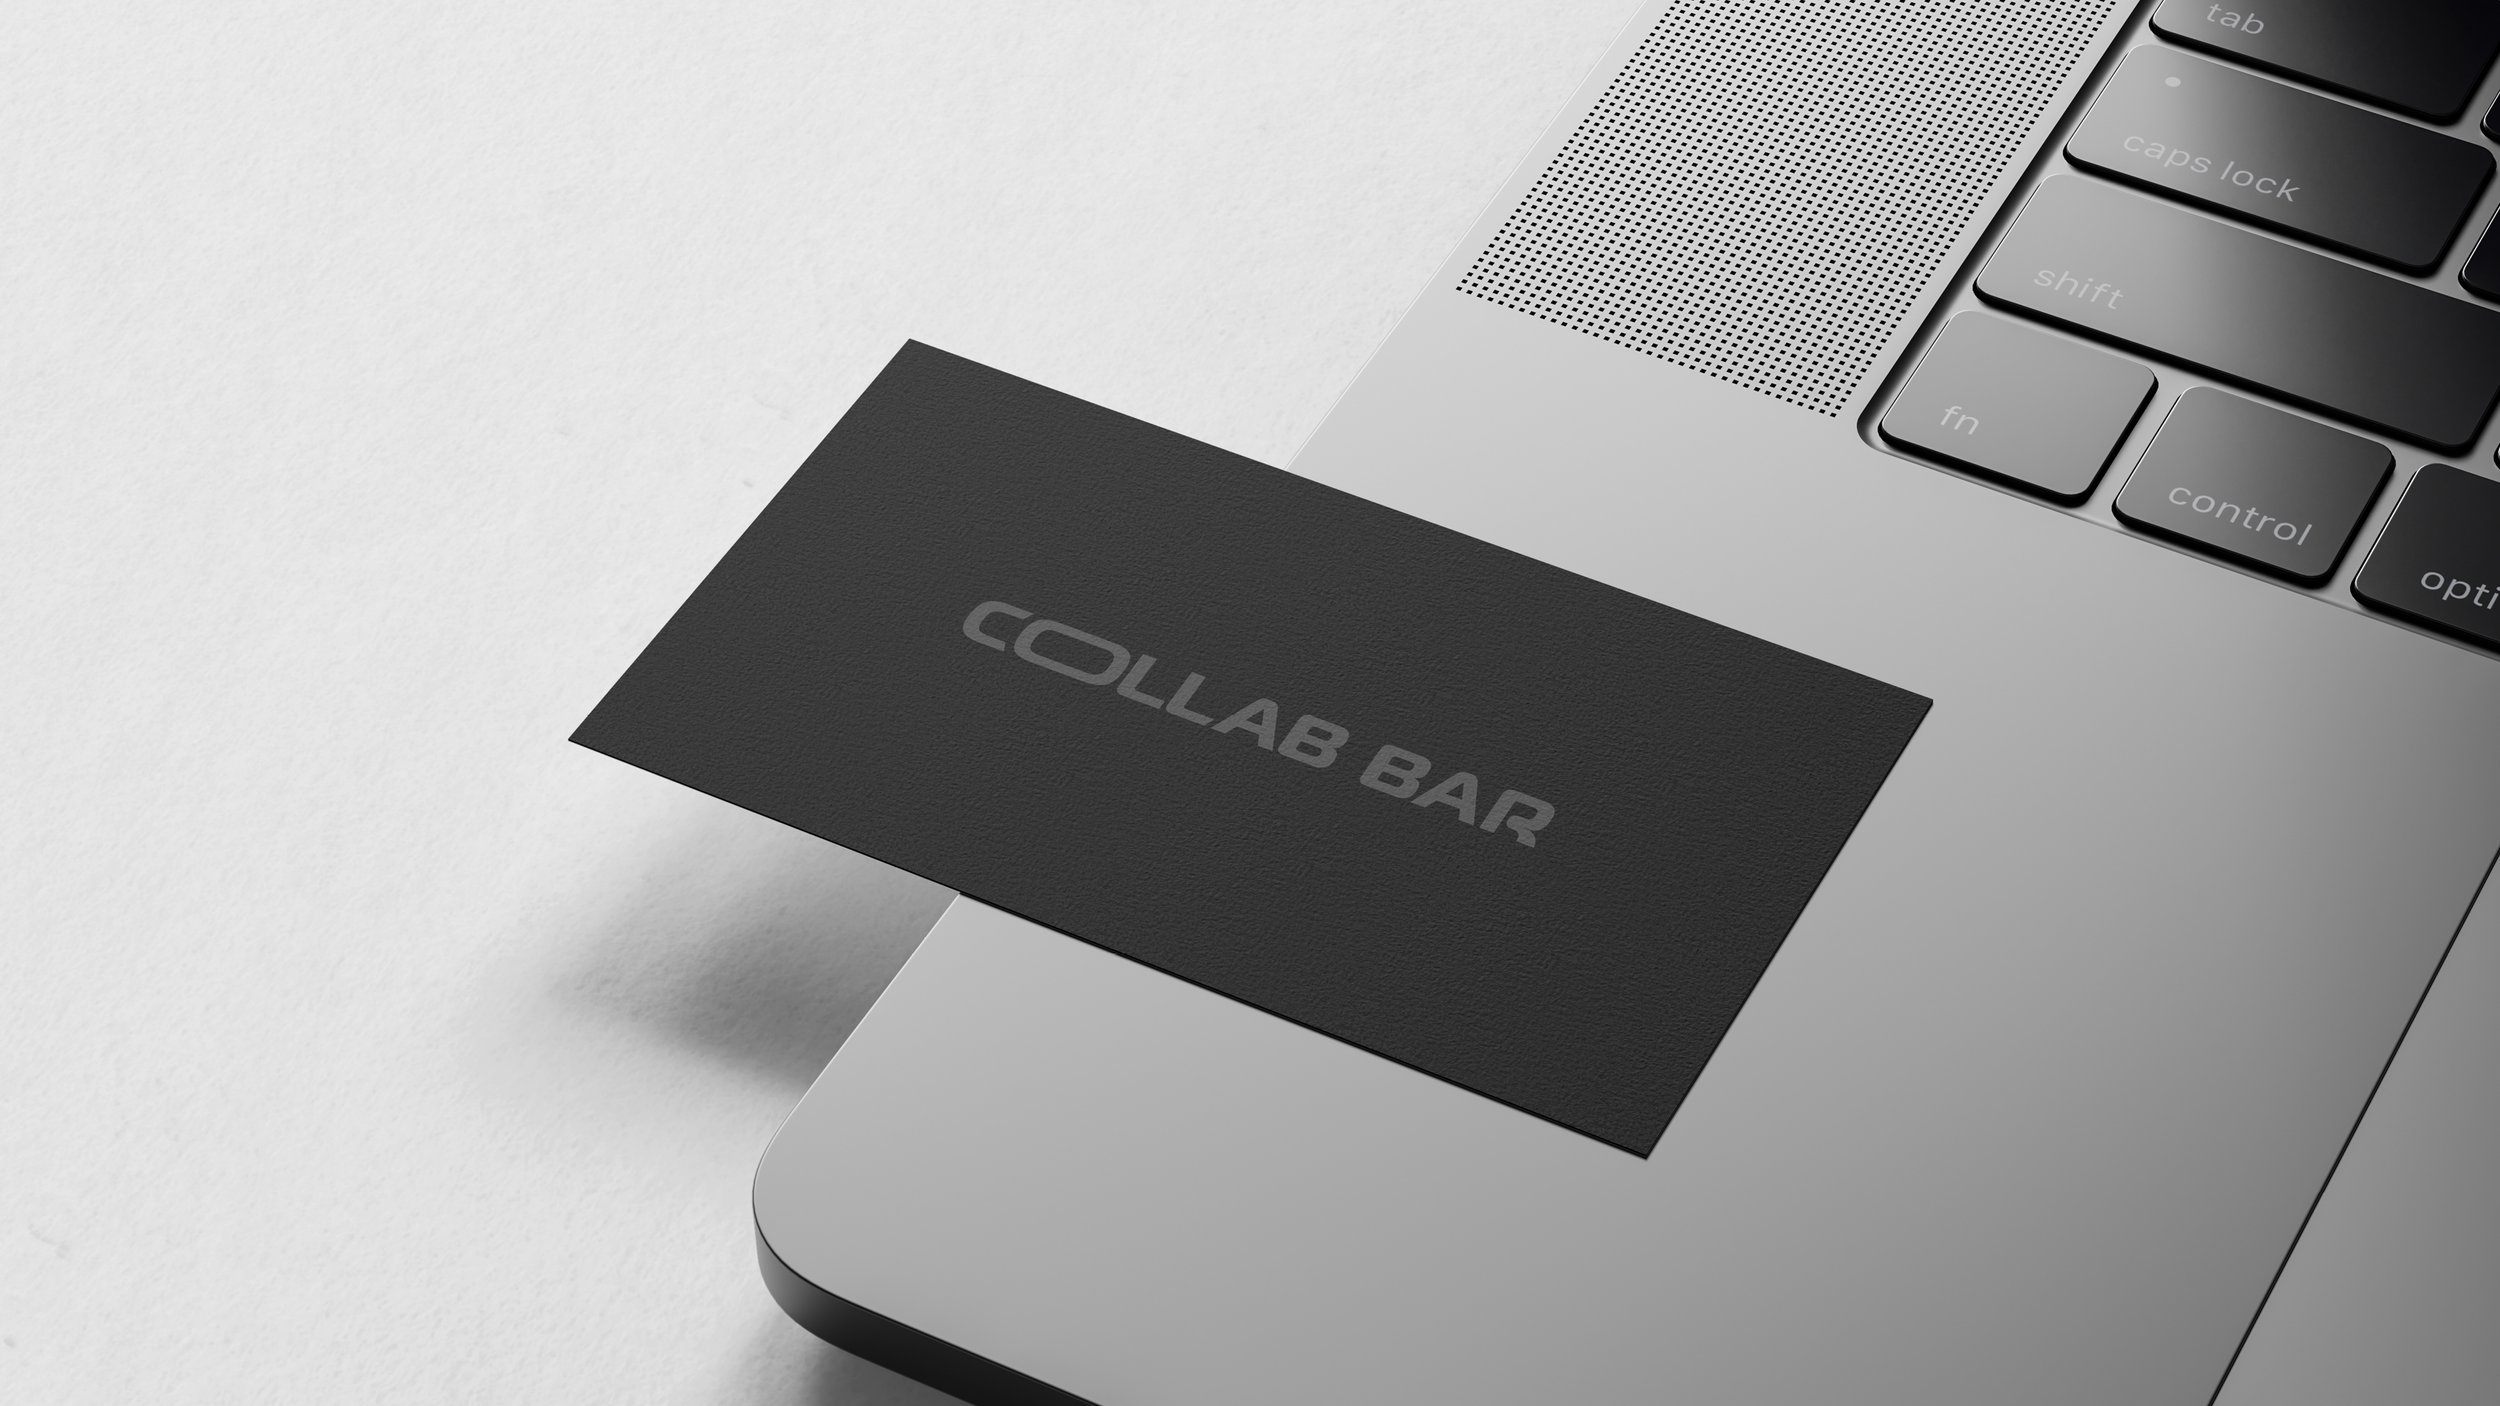 Collab Bar_Overview3.jpg